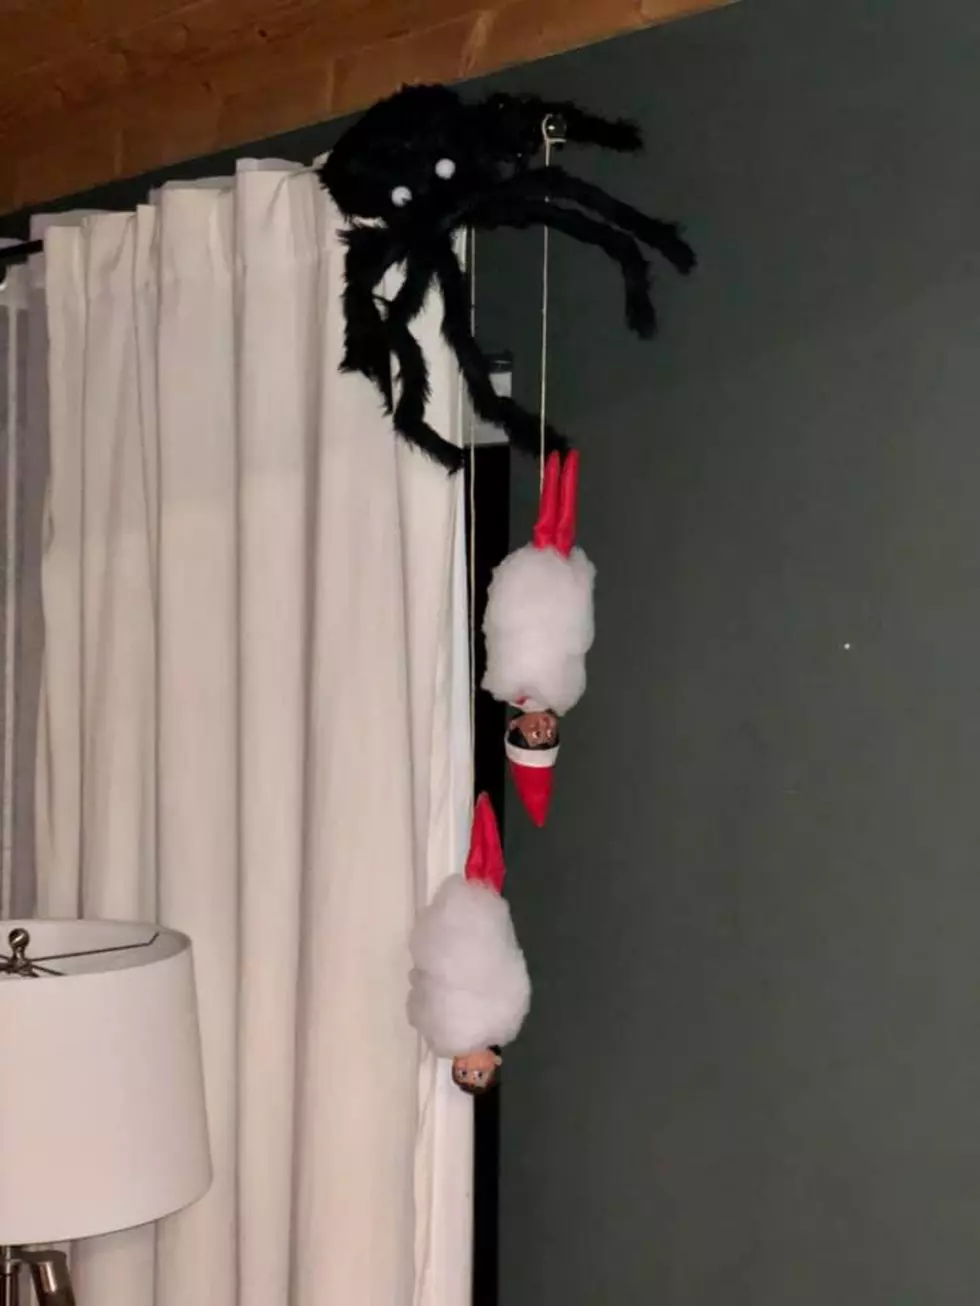 Elf On a Shelf – December 23rd